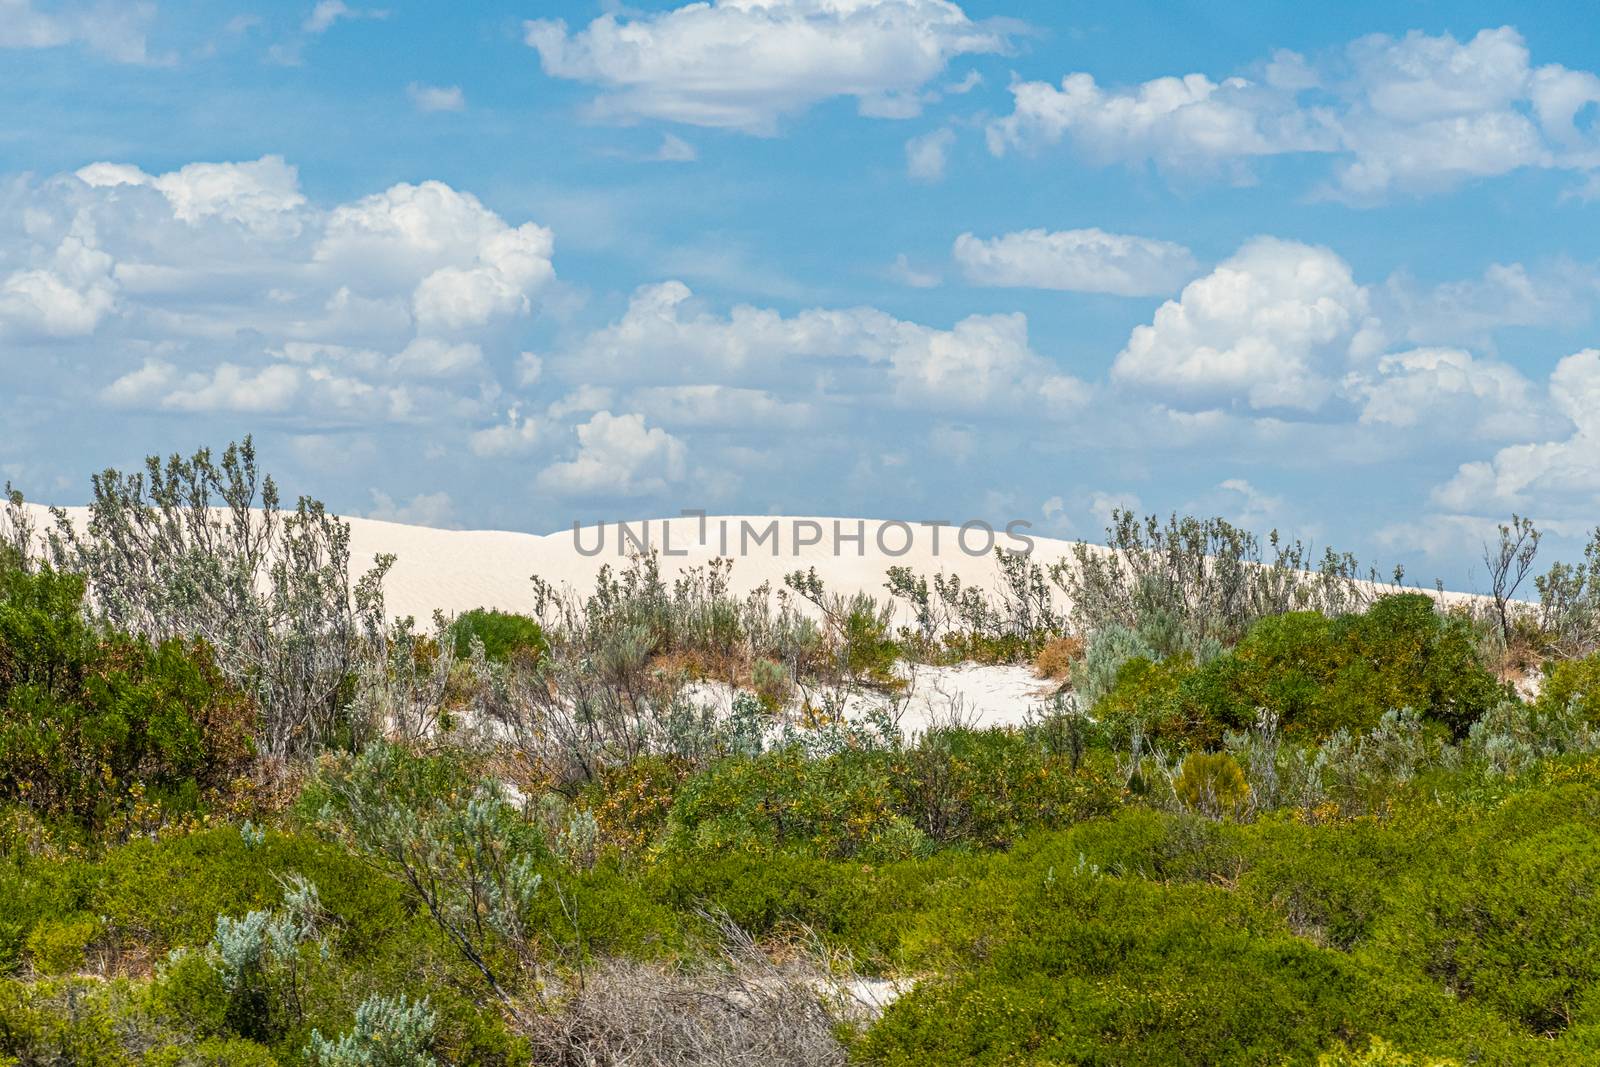 The Pinnacles Desert white sand dunes in Western Australian landscape by MXW_Stock